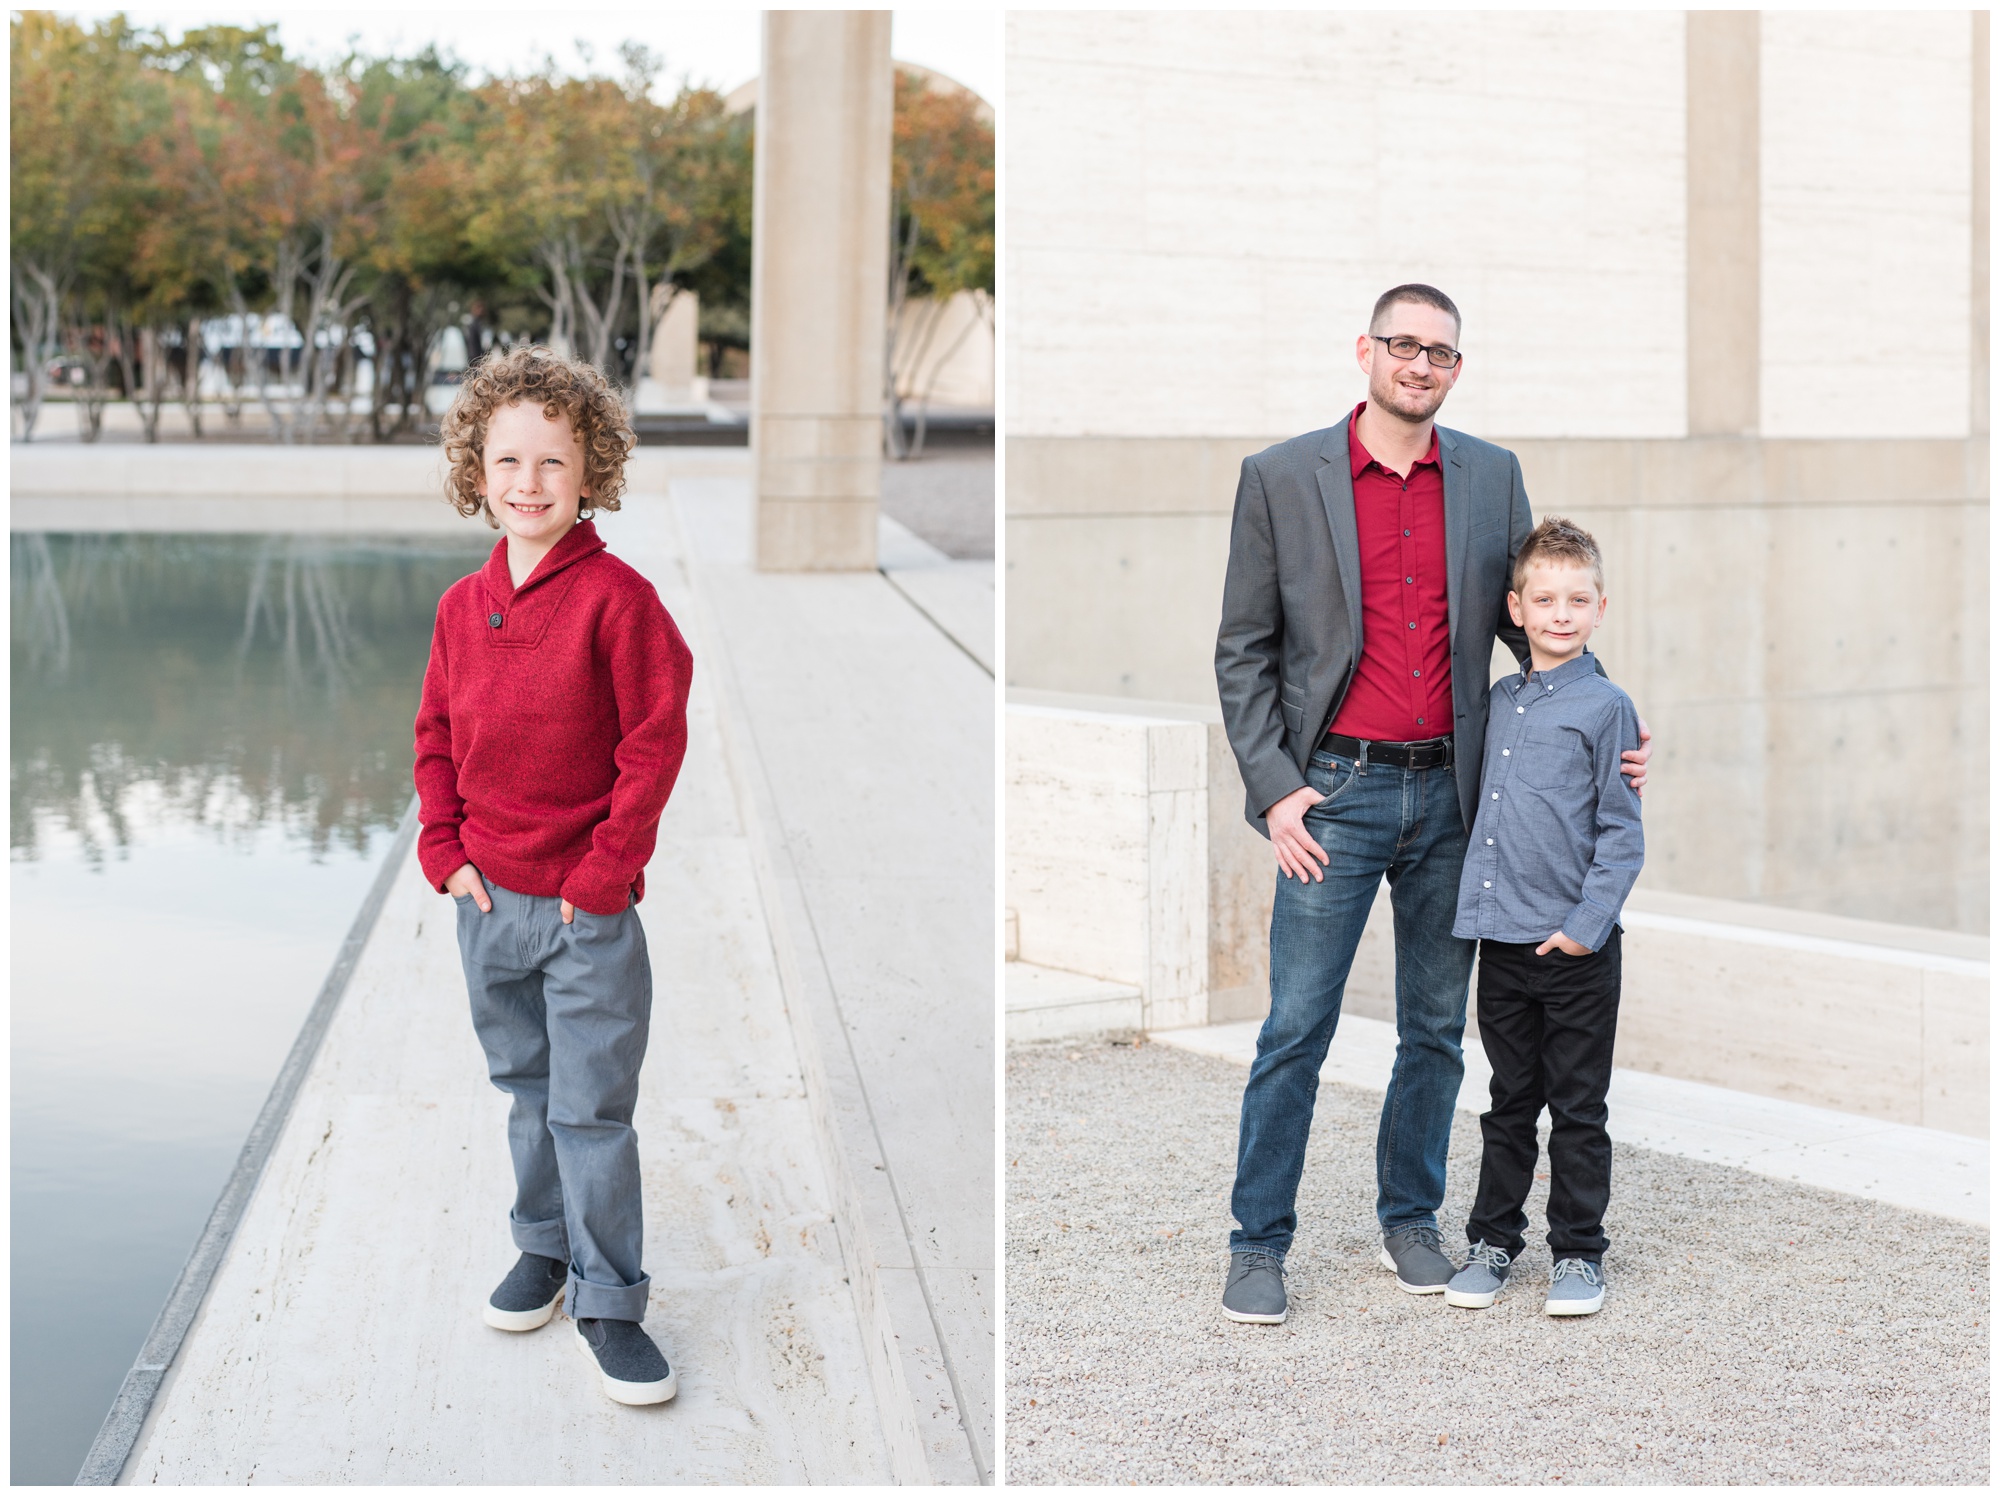 Kimbell Art Museum | Fort Worth Family Photographer | Fort Worth Photographer | Lauren Grimes Photography